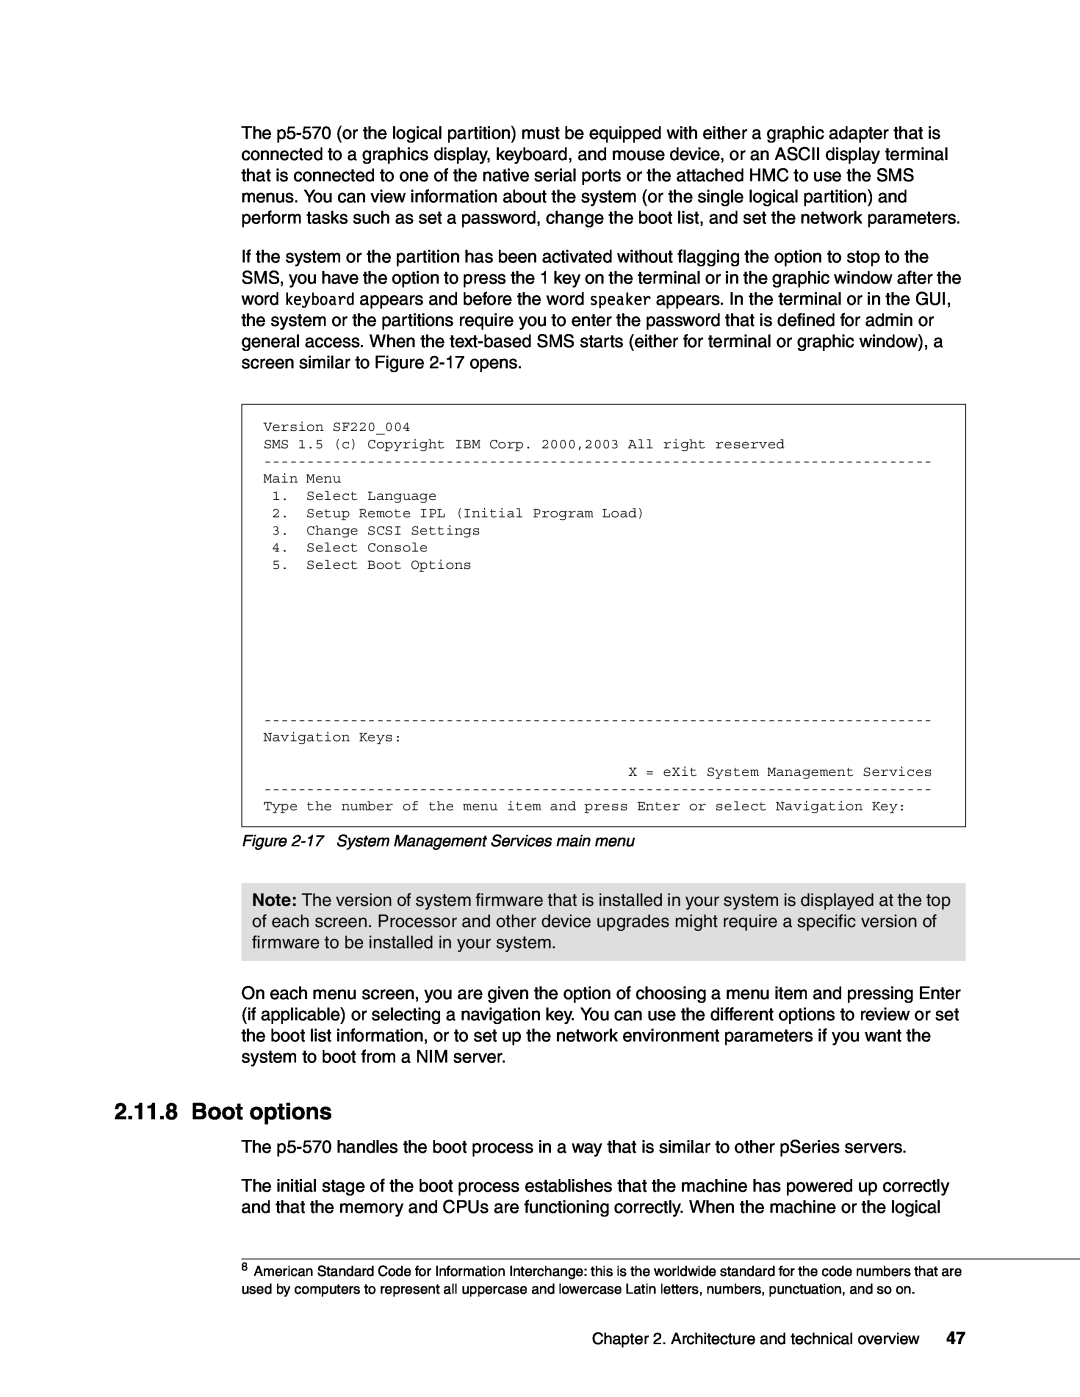 IBM P5 570 manual Boot options, 17System Management Services main menu 